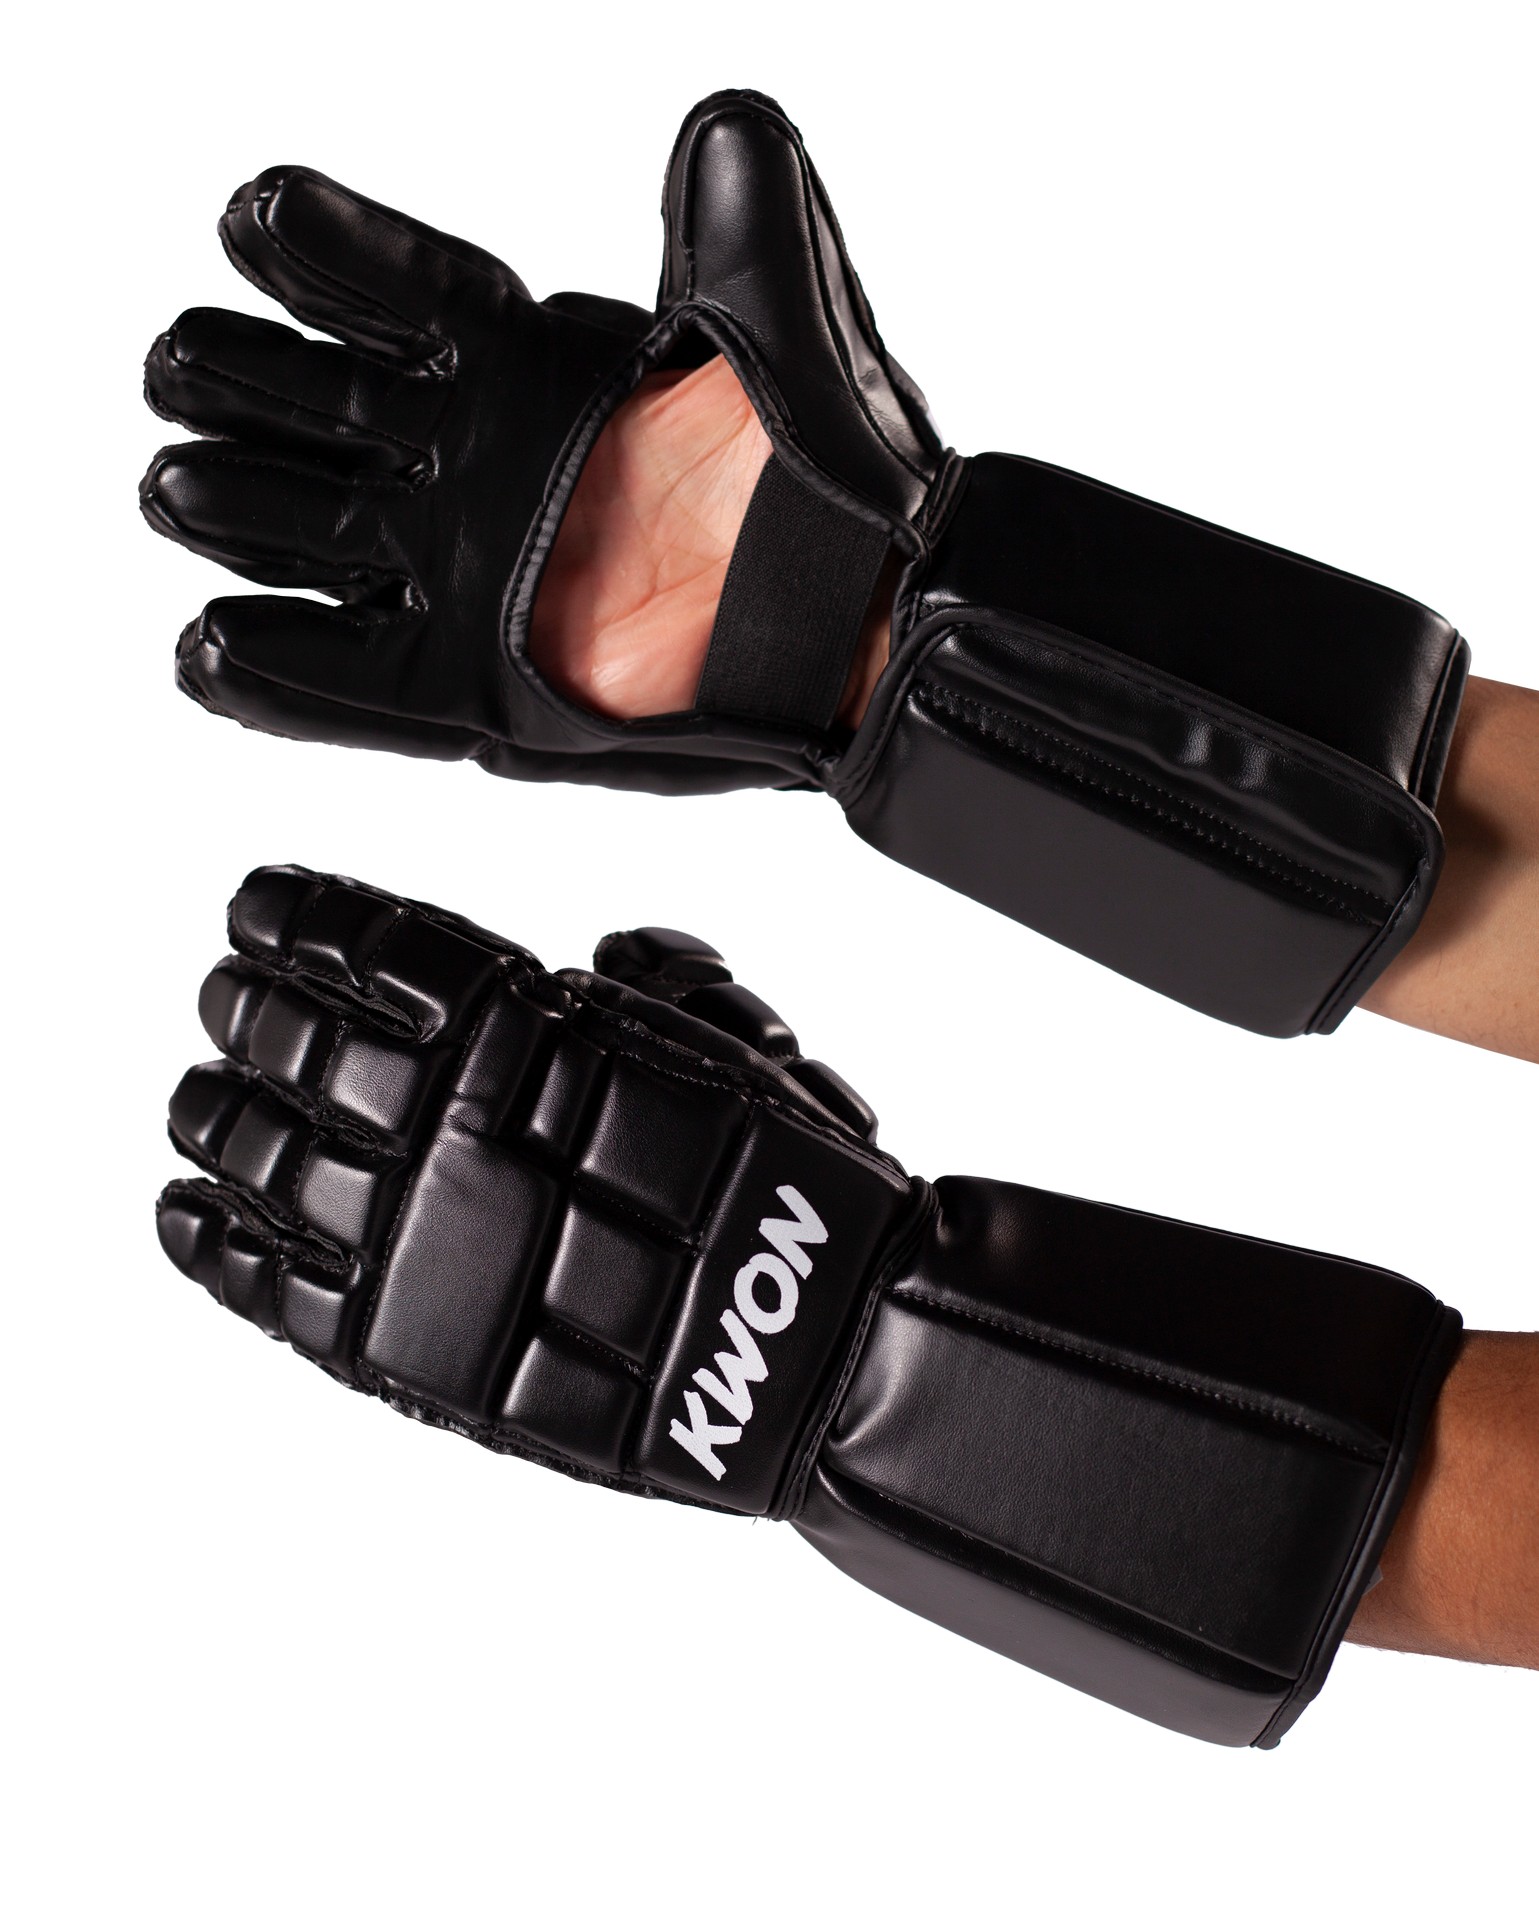 KWON Escrima Gloves | Forearm Protection | Trainingshandschuhe